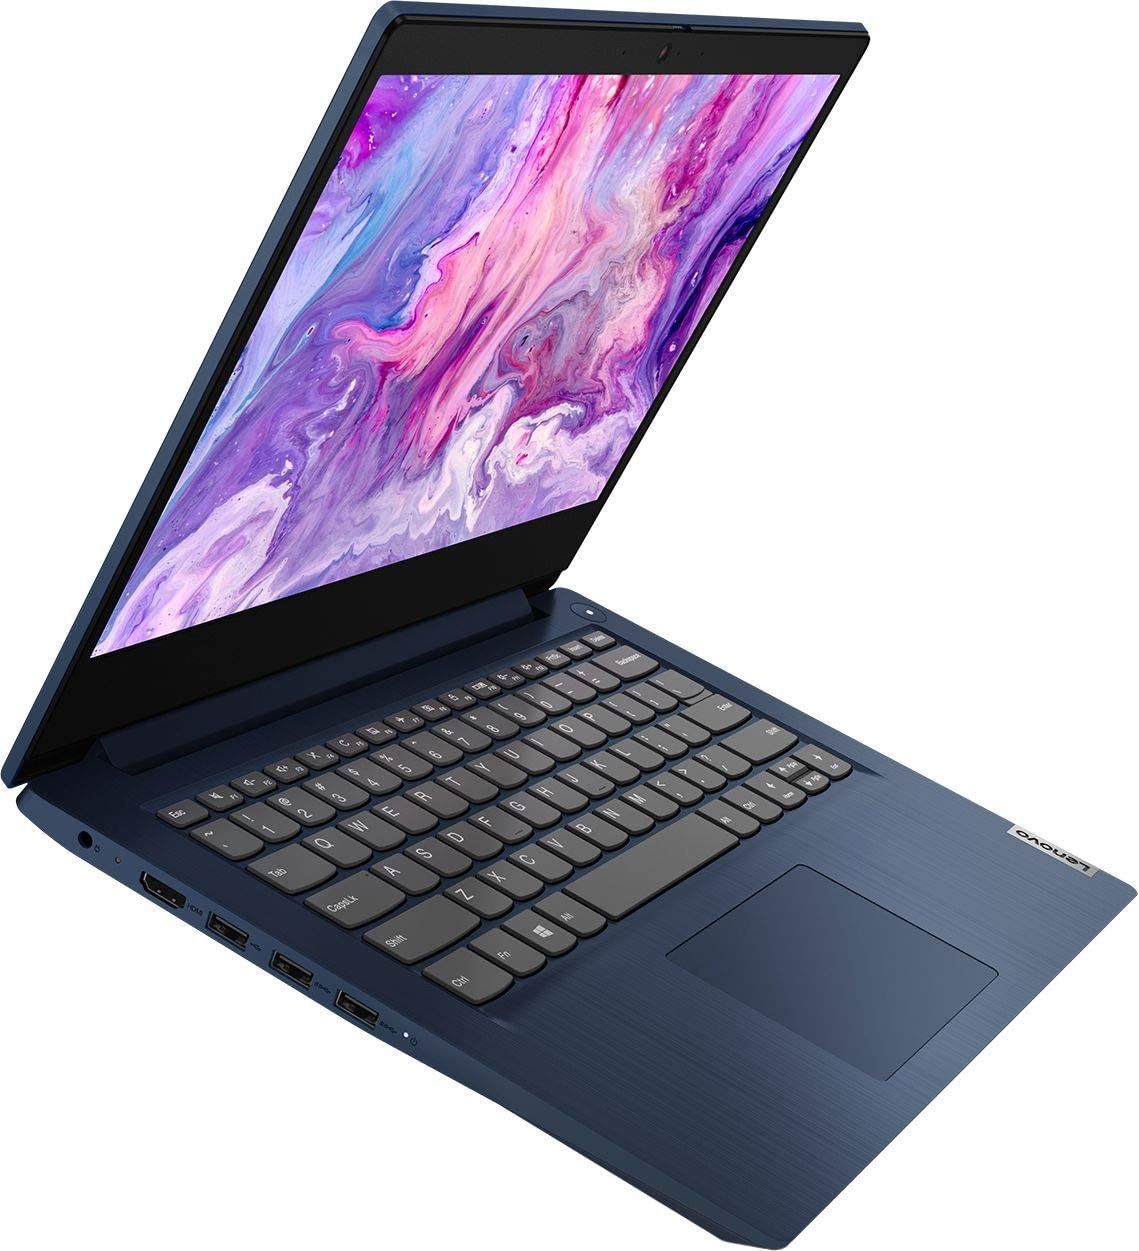 2020 Flagship Lenovo Ideapad 3 Laptop 2